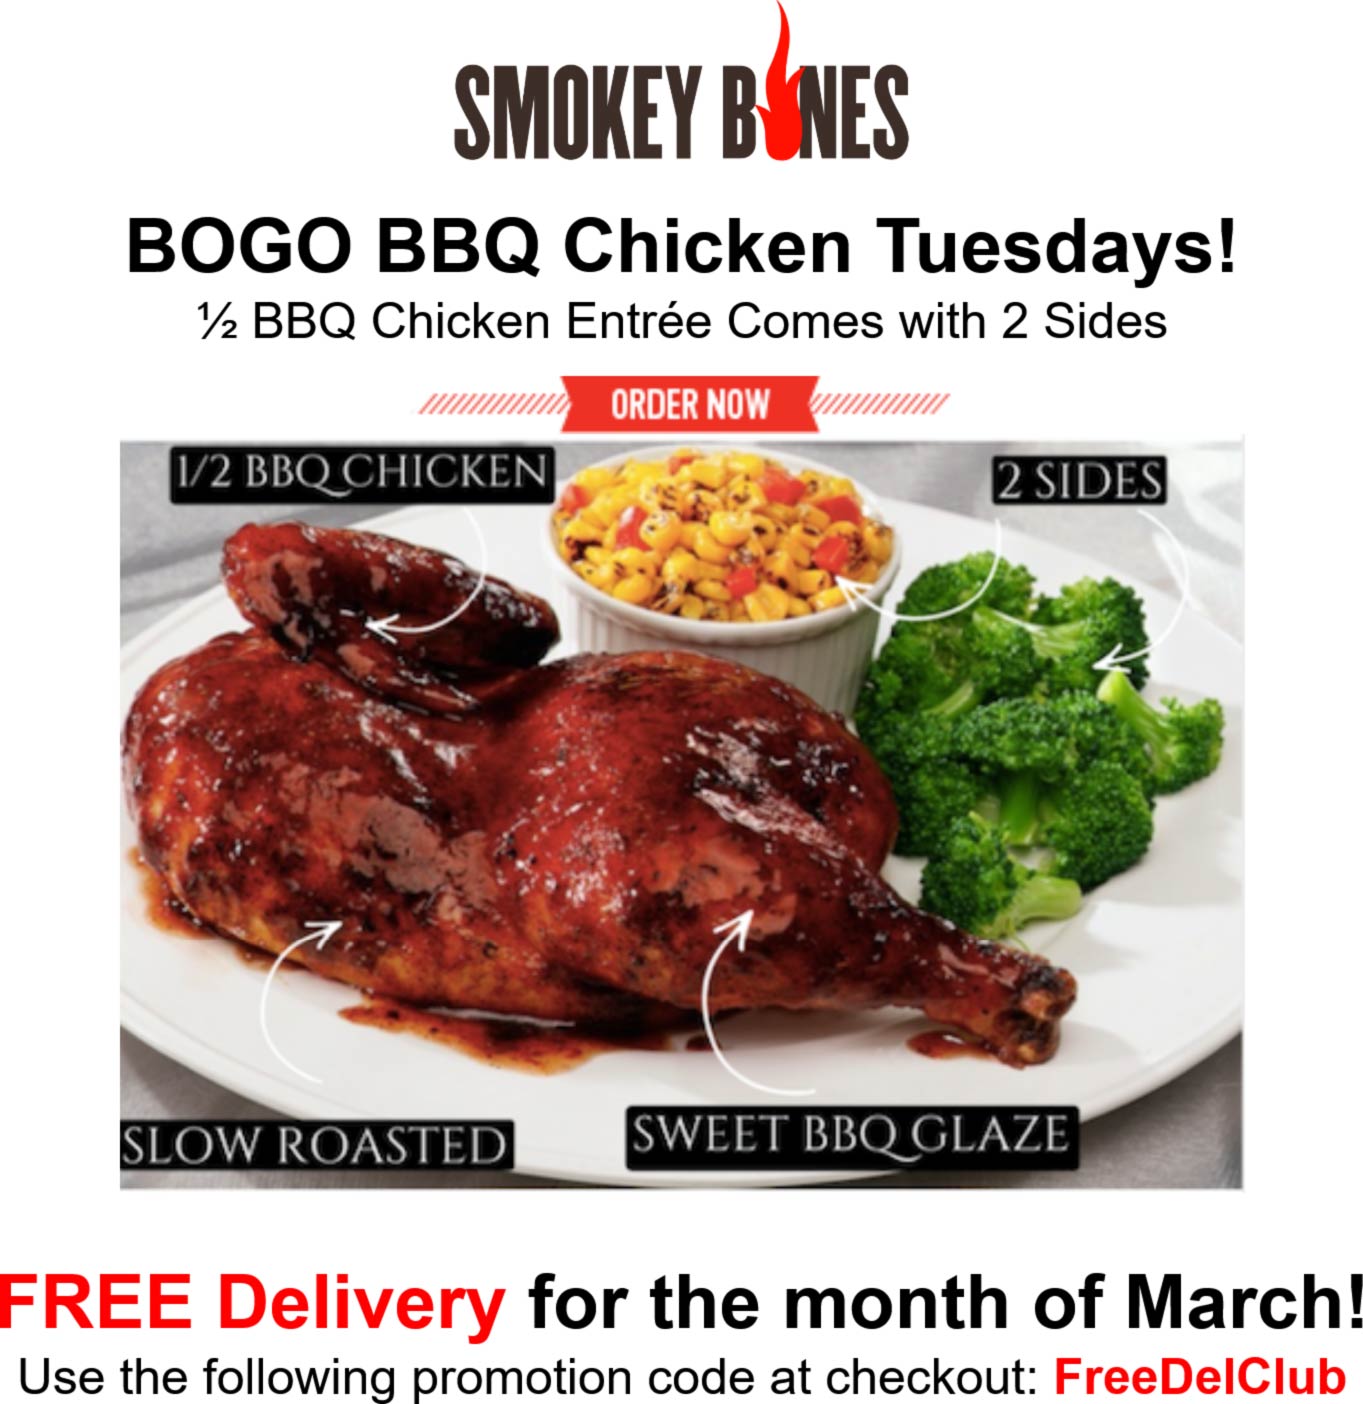 Smokey Bones restaurants Coupon  Second half chicken meal free today at Smokey Bones #smokeybones 